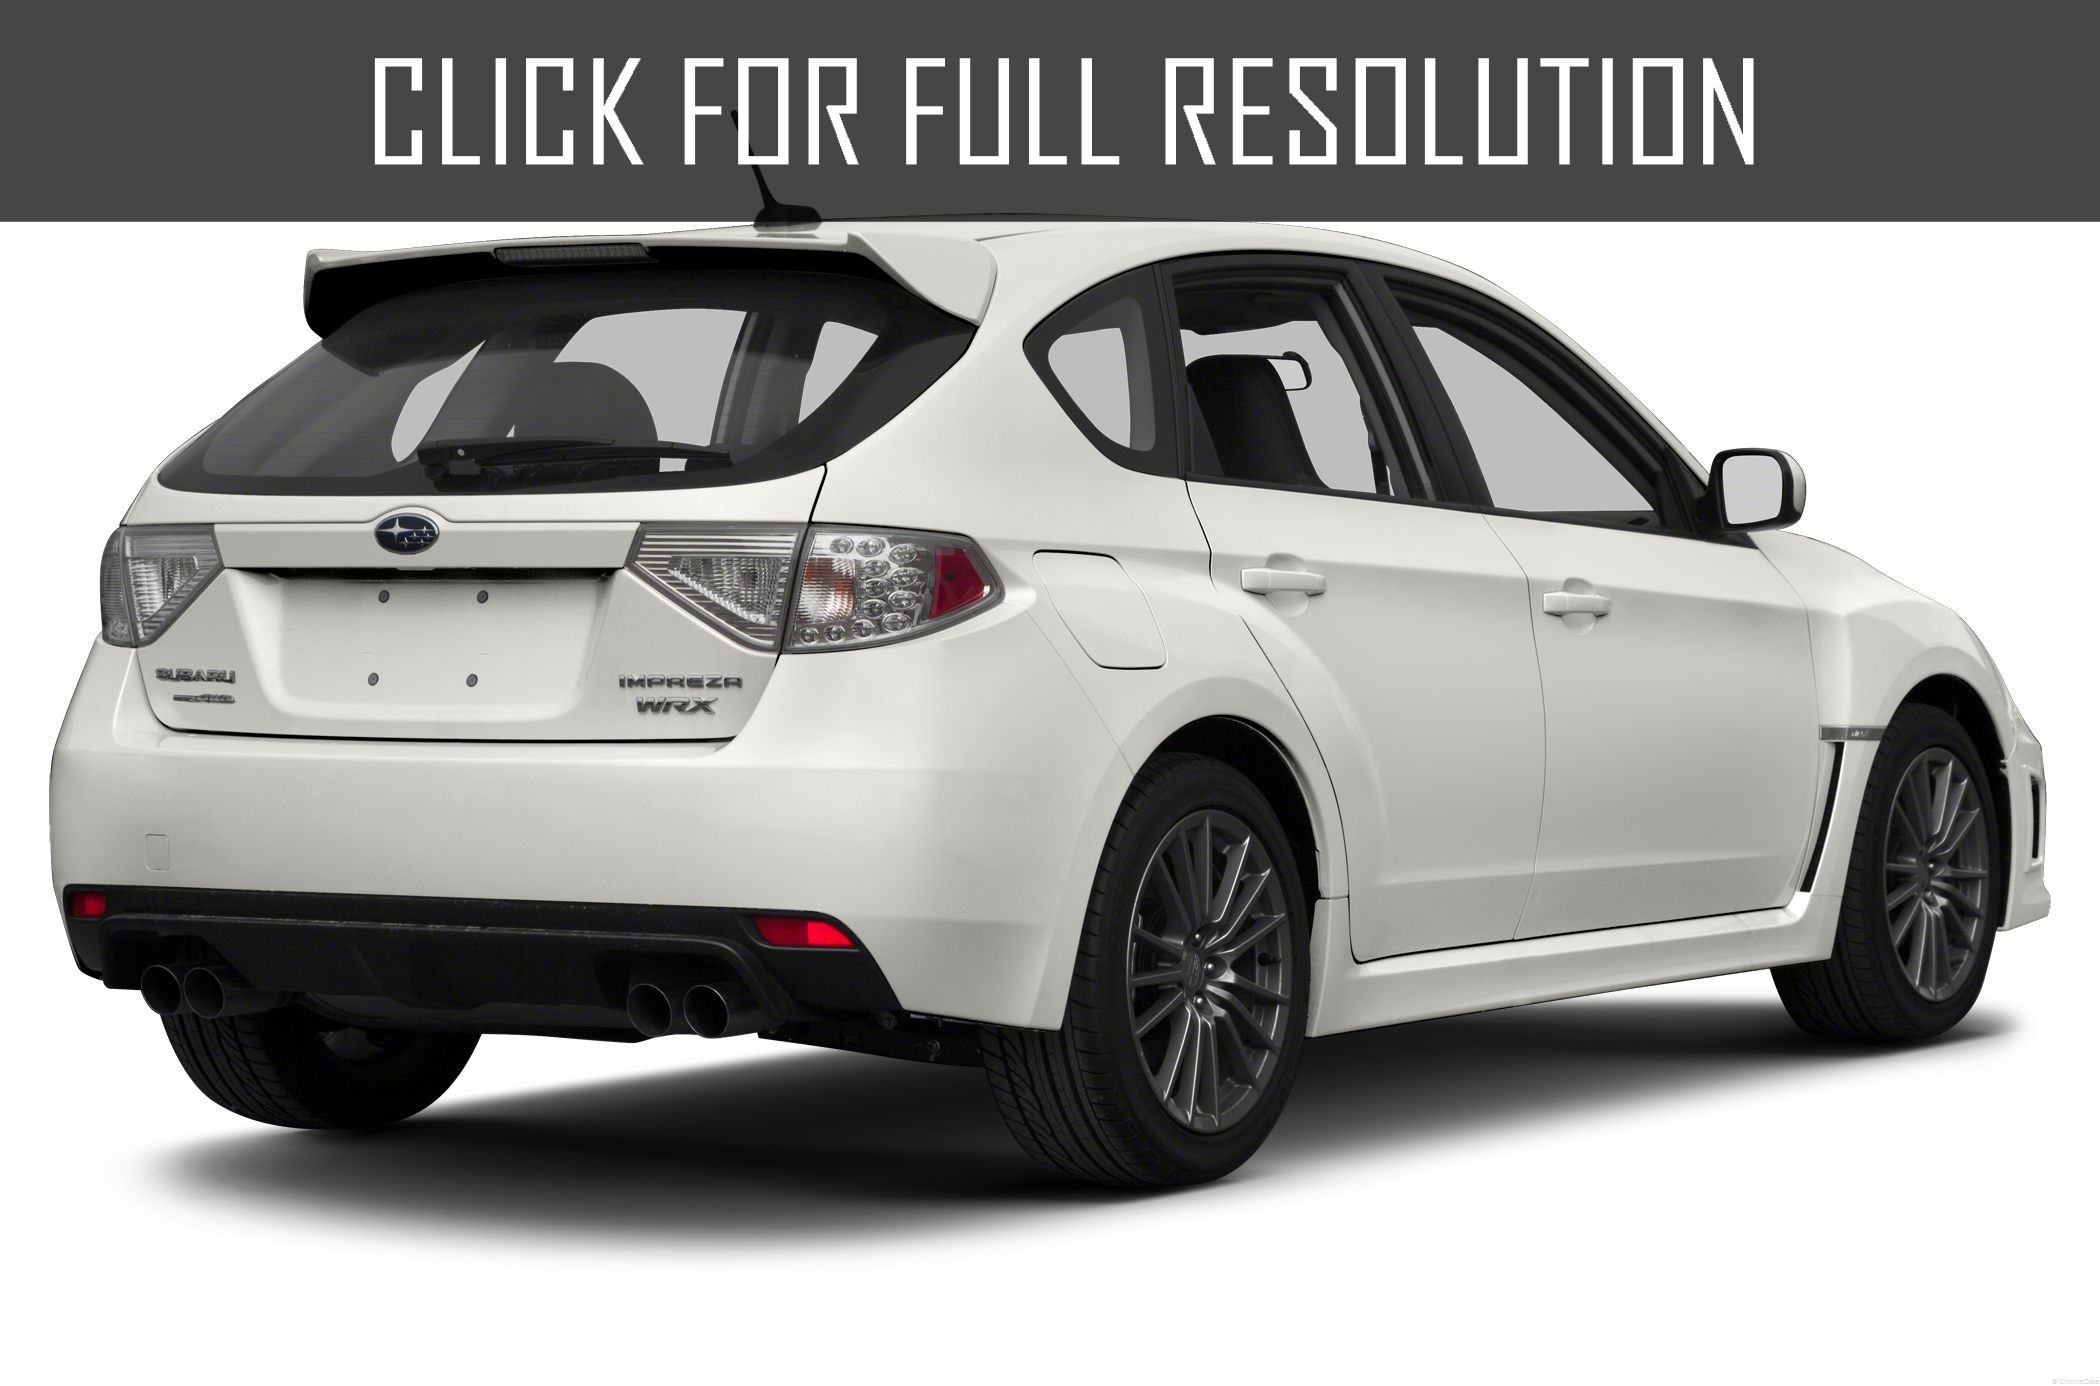 2014 Subaru Impreza Wrx Hatchback news, reviews, msrp